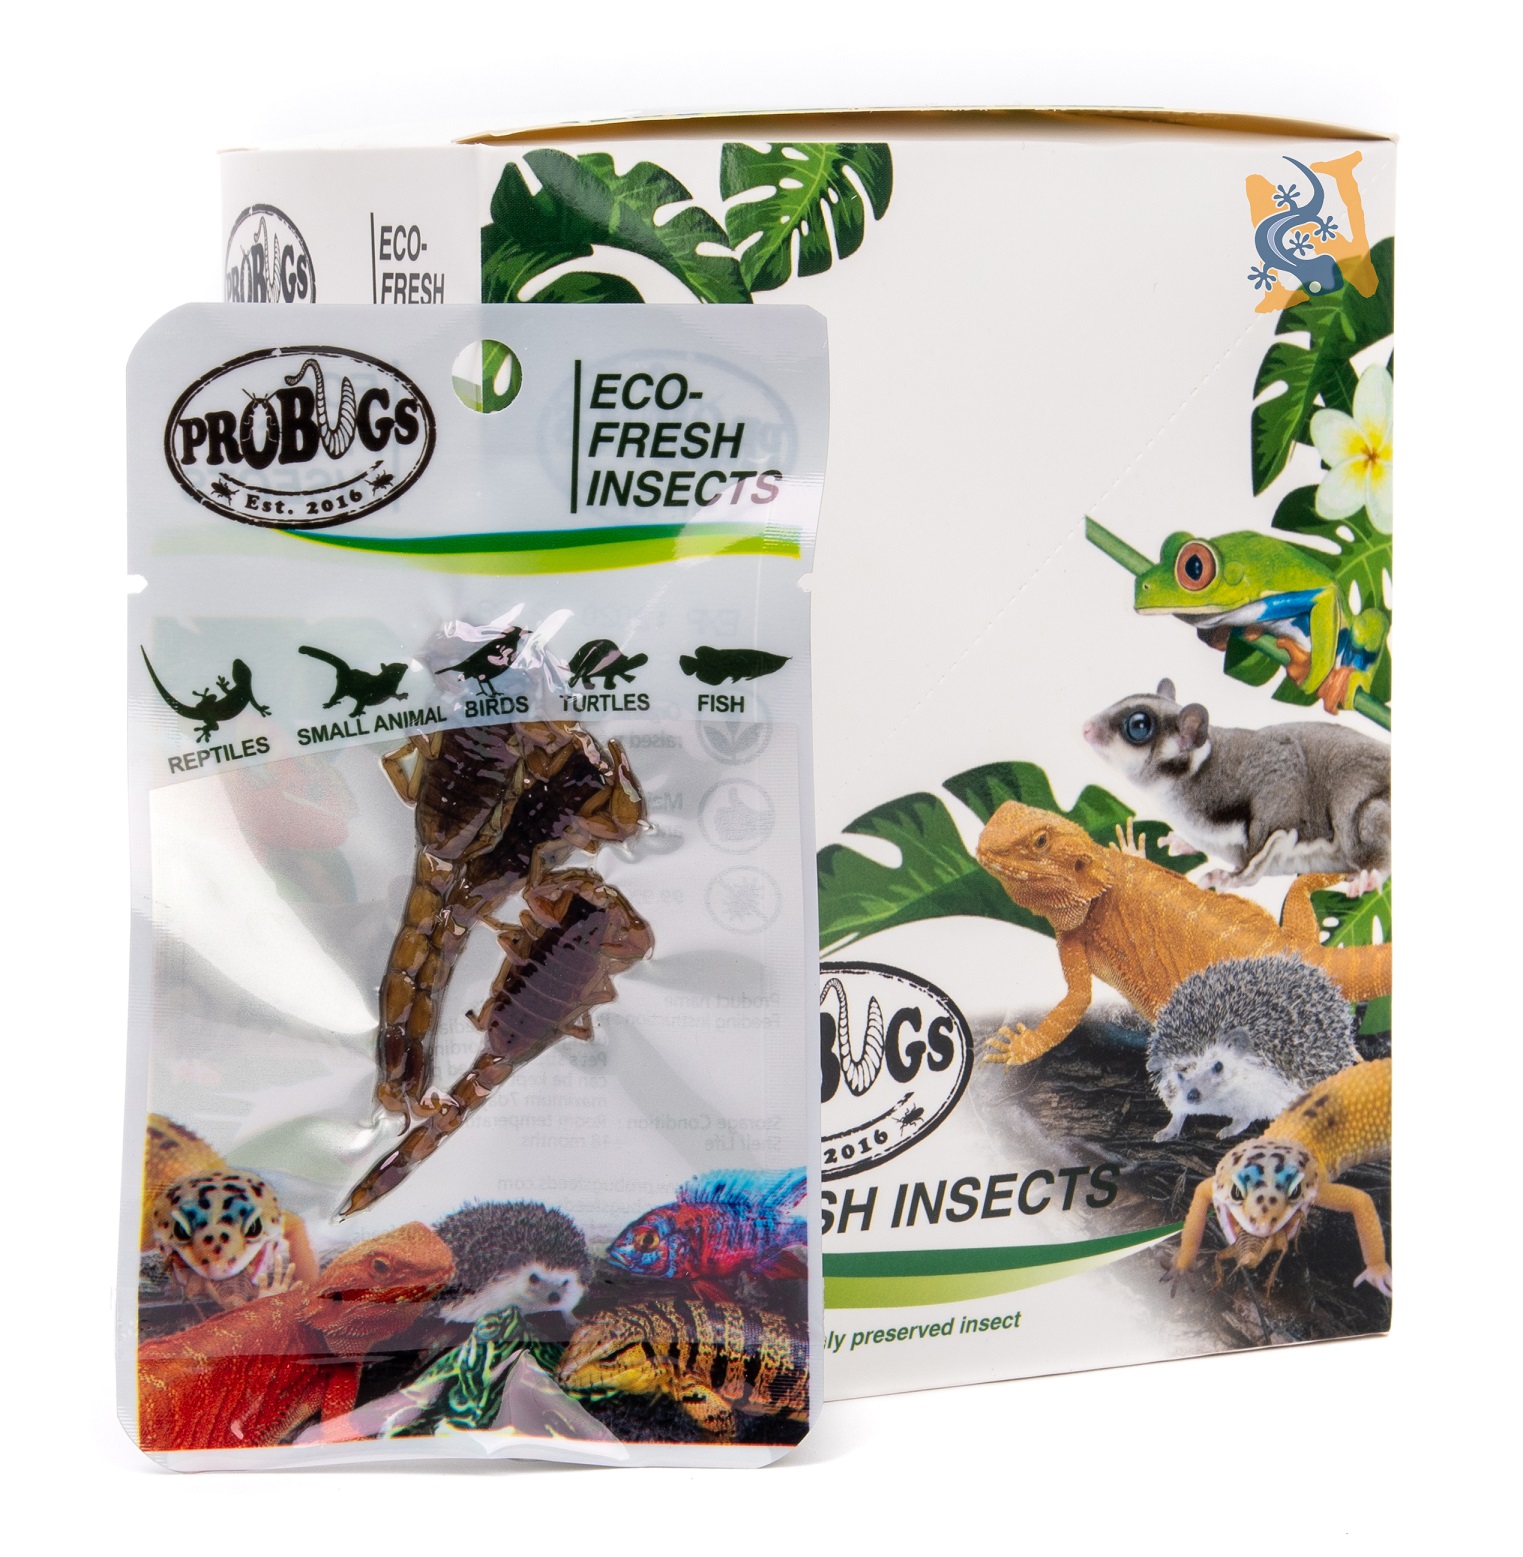 Eco-Fresh Scorpions - 10 pack